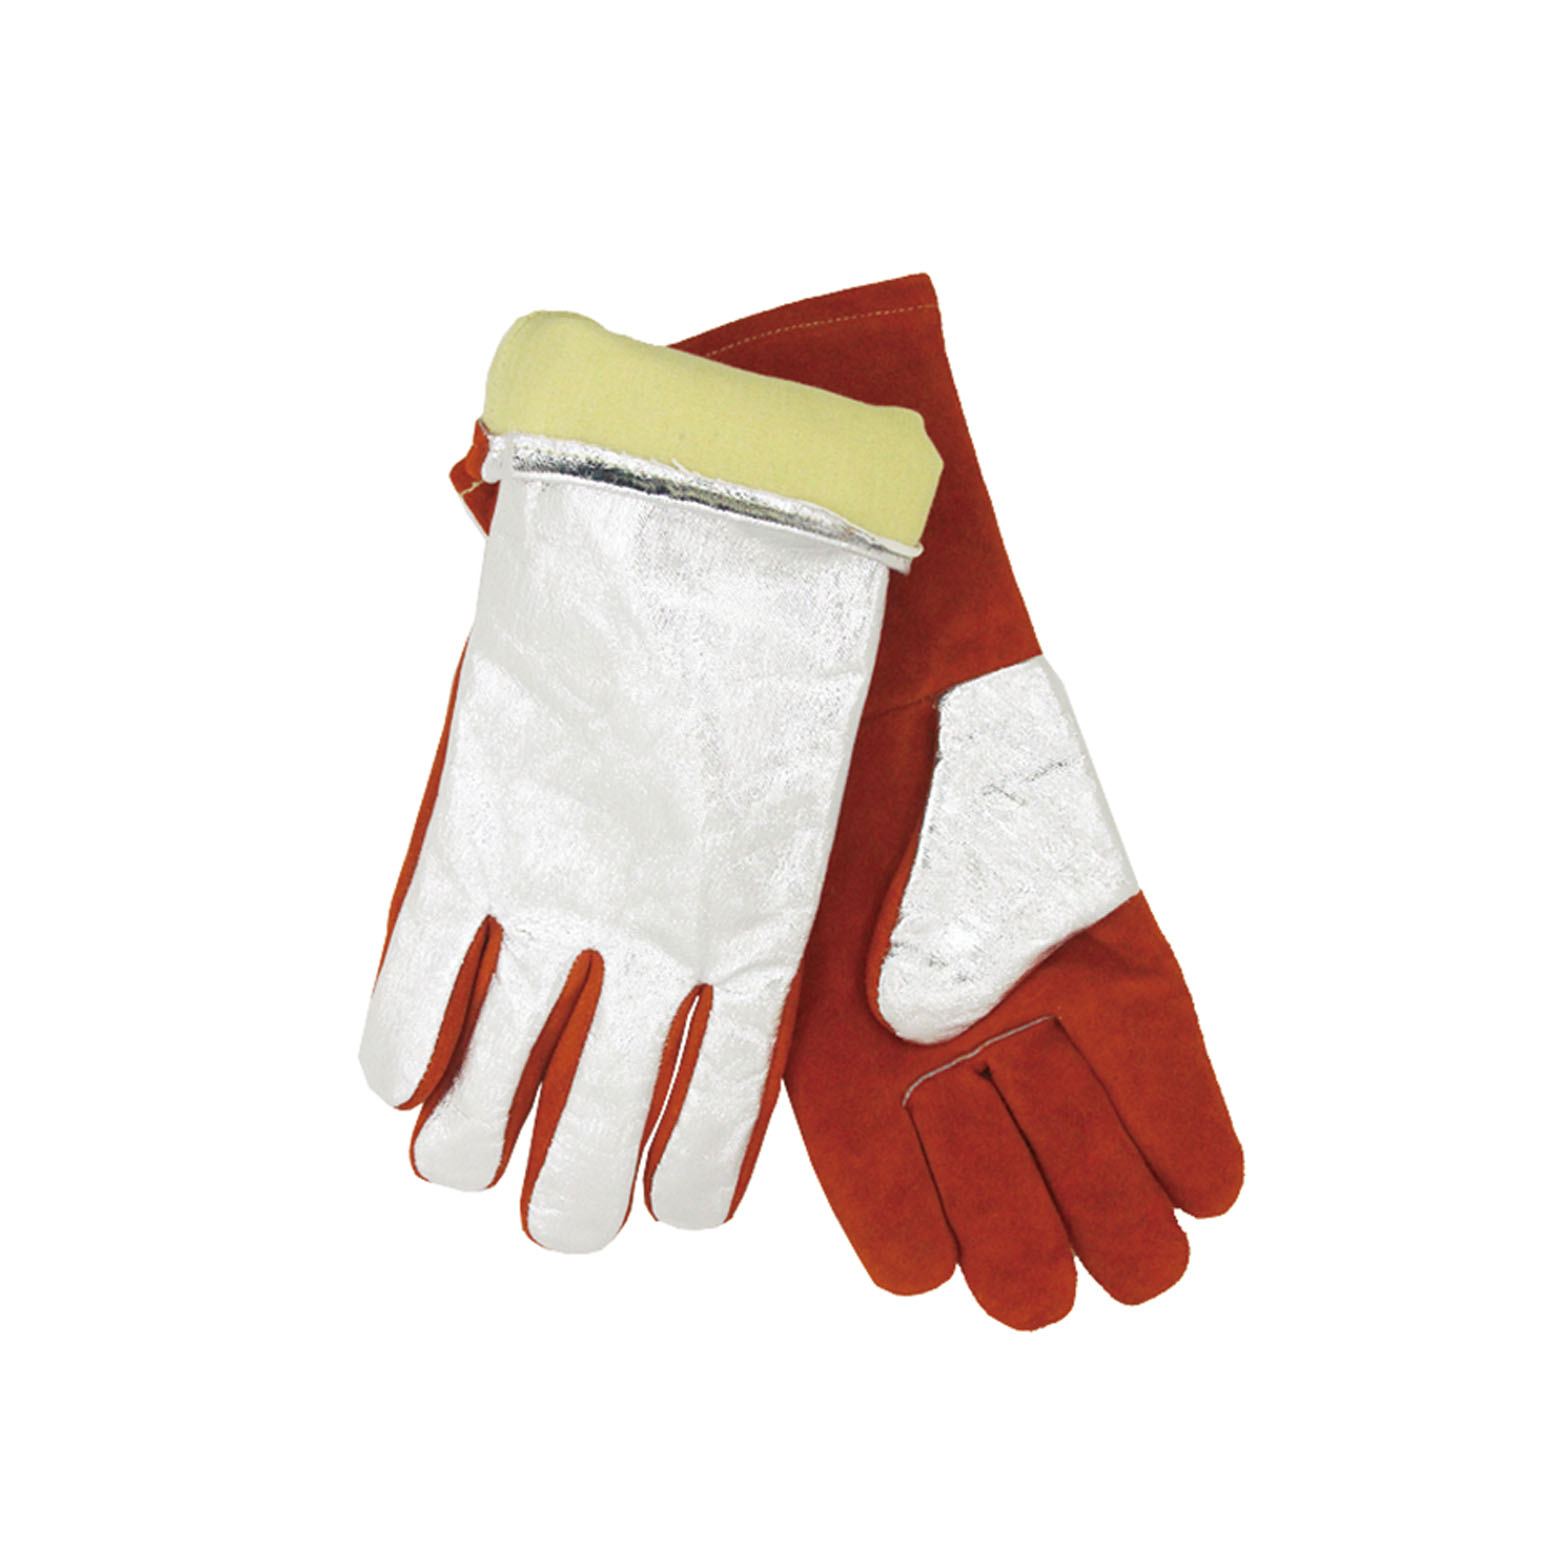 Get Star Weld Orange red fireproof cut-proof heat-proof gloves